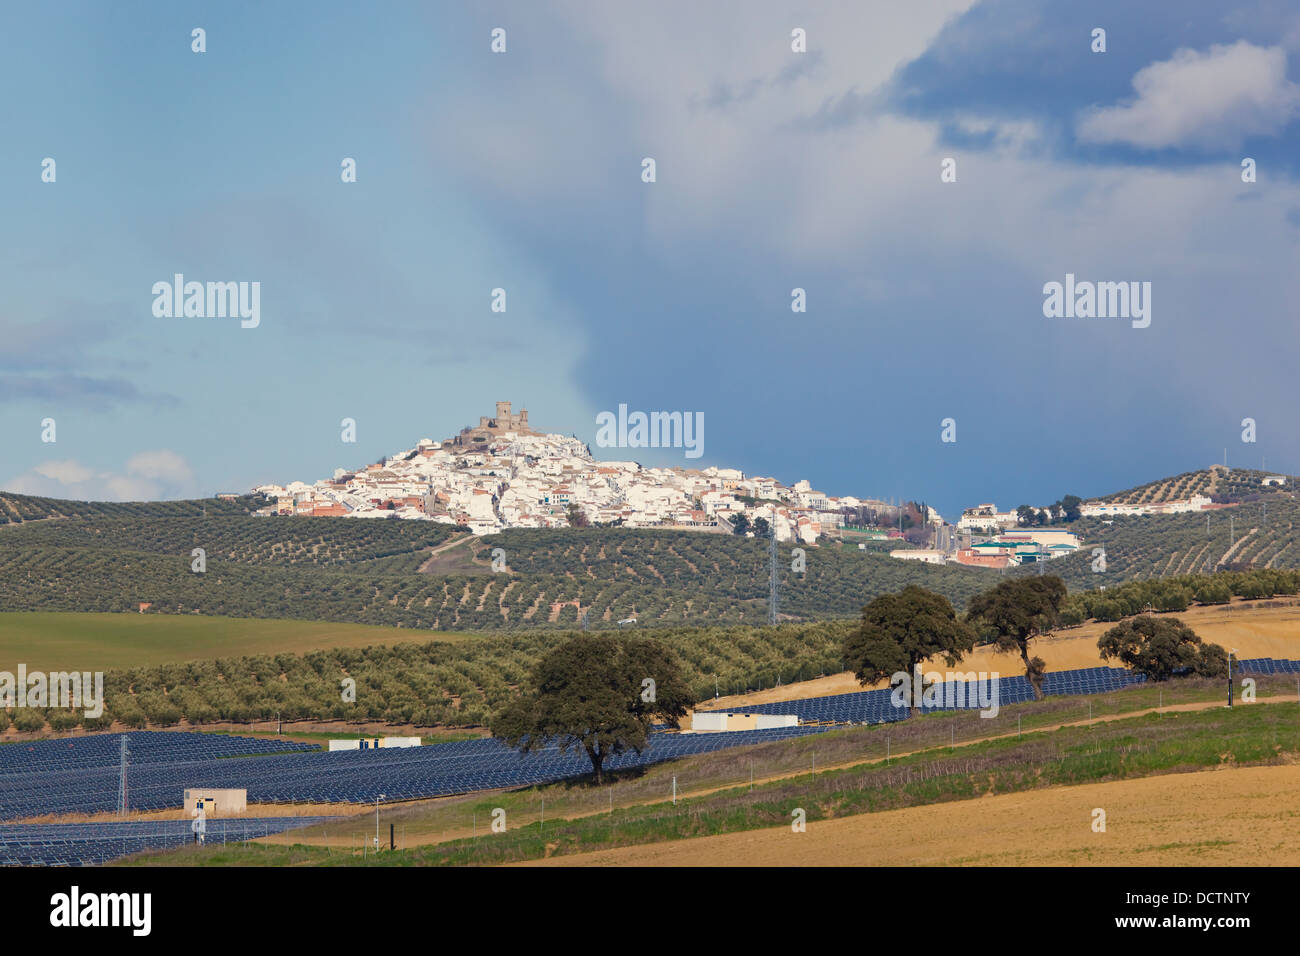 Town With Solar Panels, Espejo, Cordoba, Spain Stock Photo